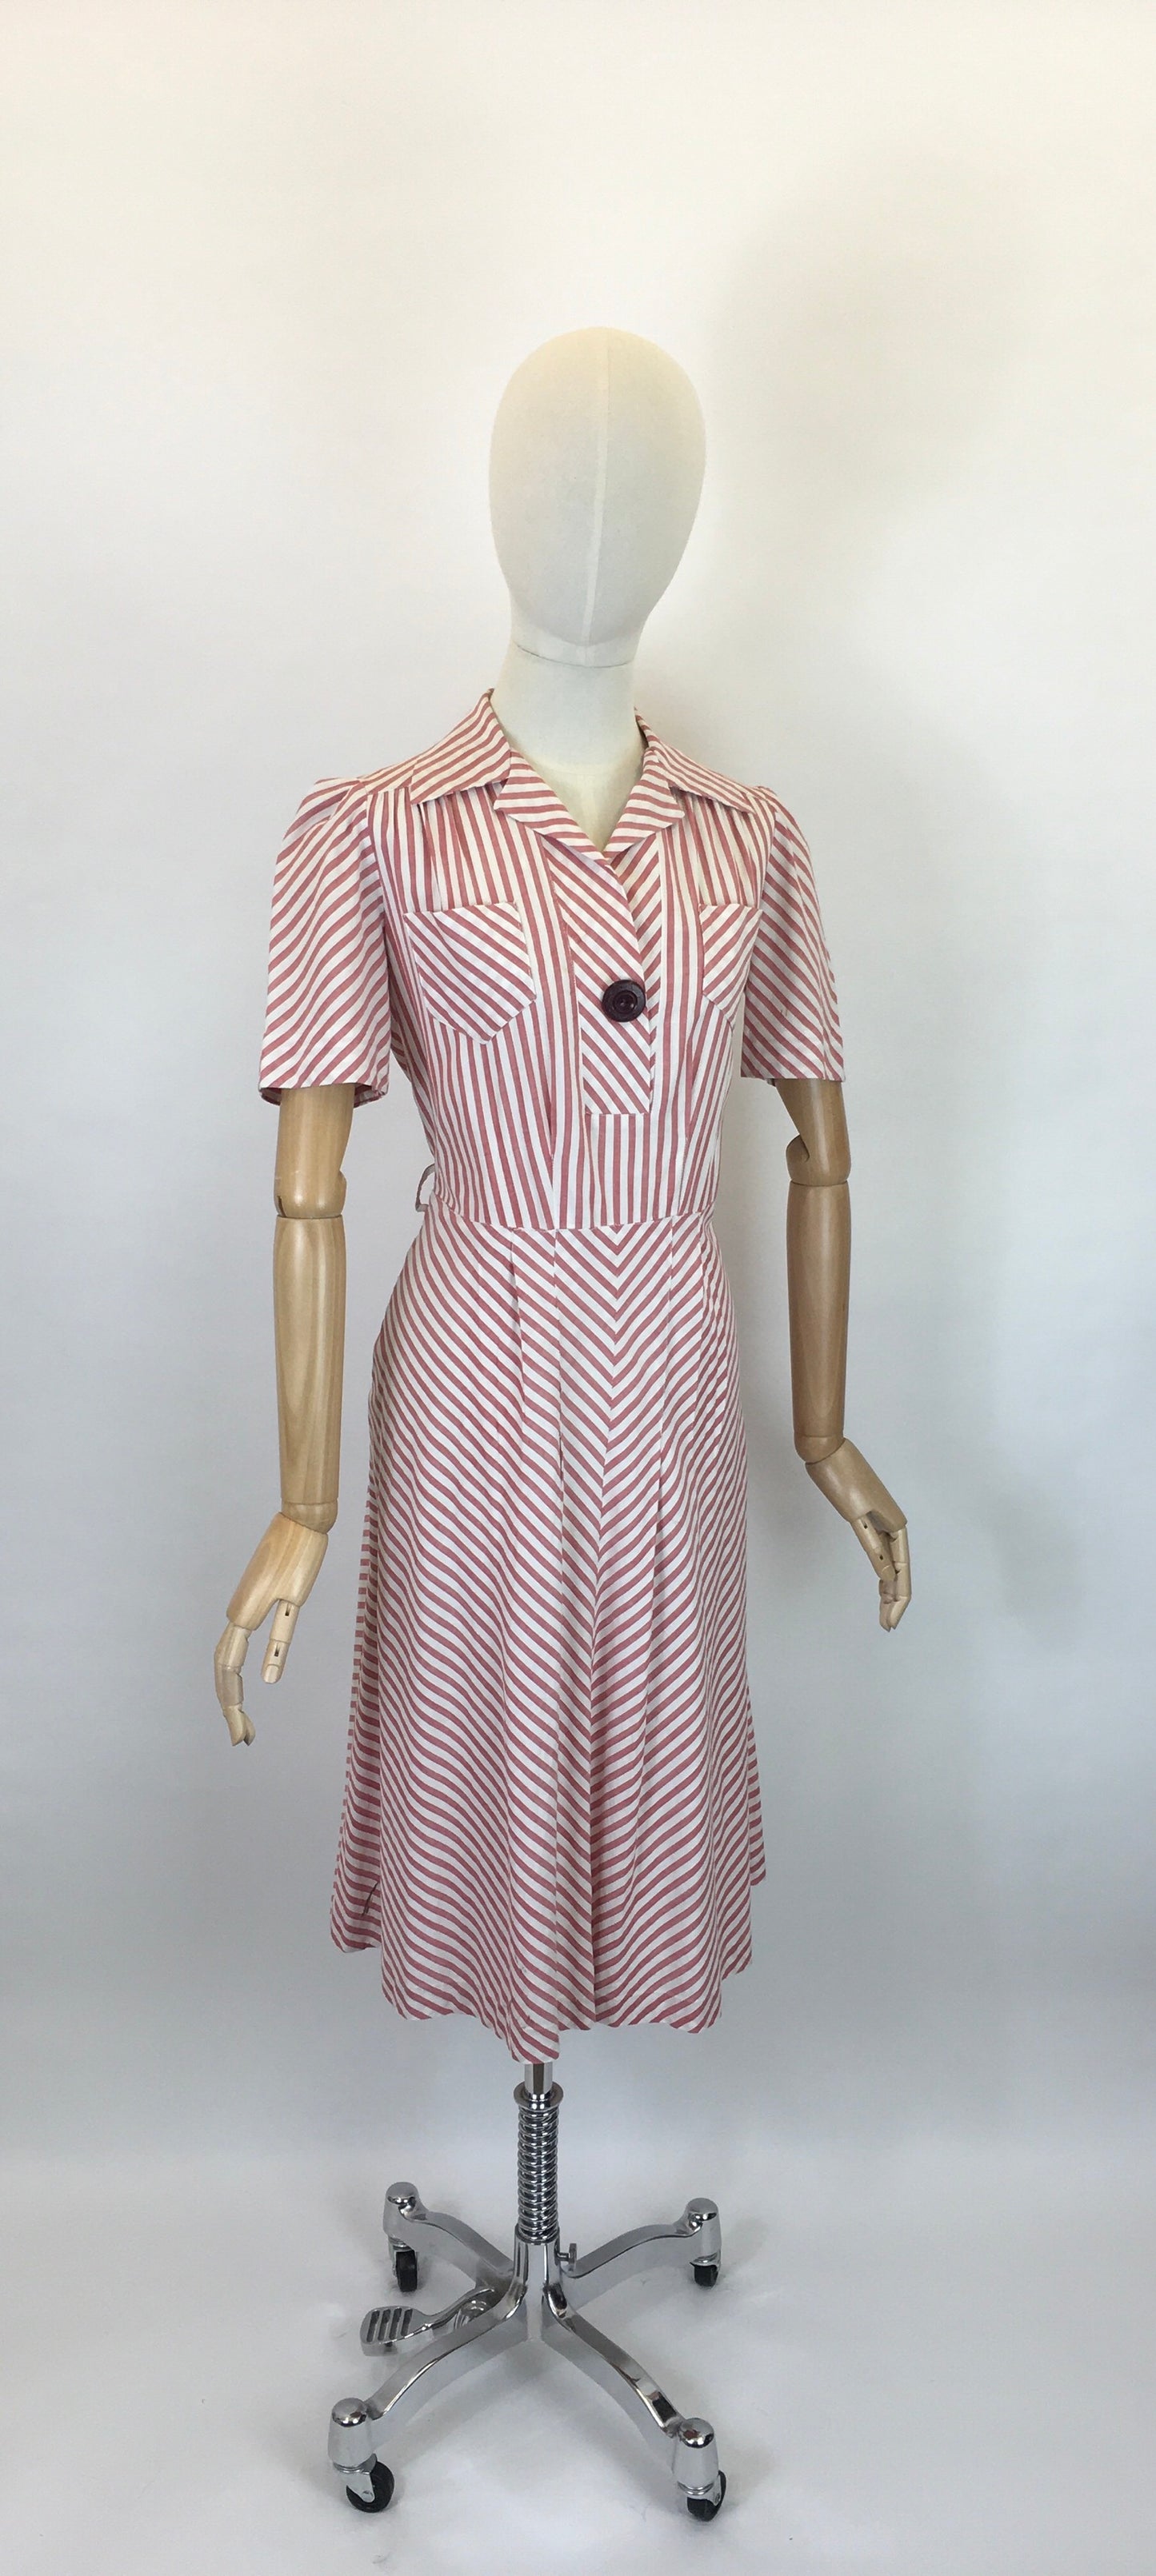 Original 1940s Darling Cotton Day Dress - In A Beautiful Pale Cranberry & White Stripe